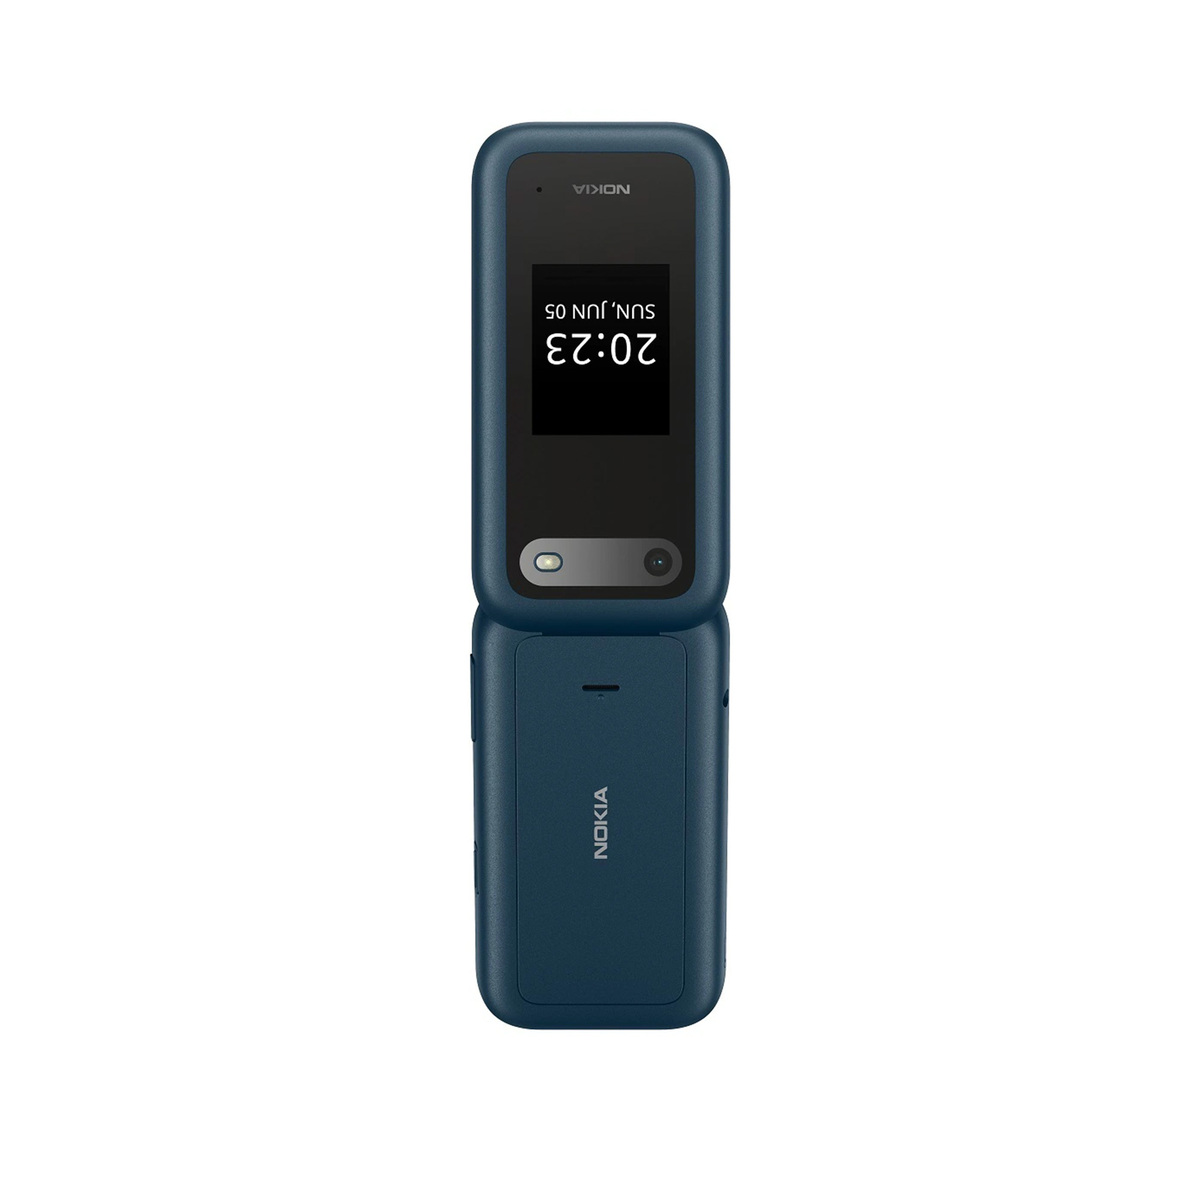 Nokia 2660 TA1474 DS 4FF+LTE Dual standby, 48 MB RAM, 128MB storage, Blue